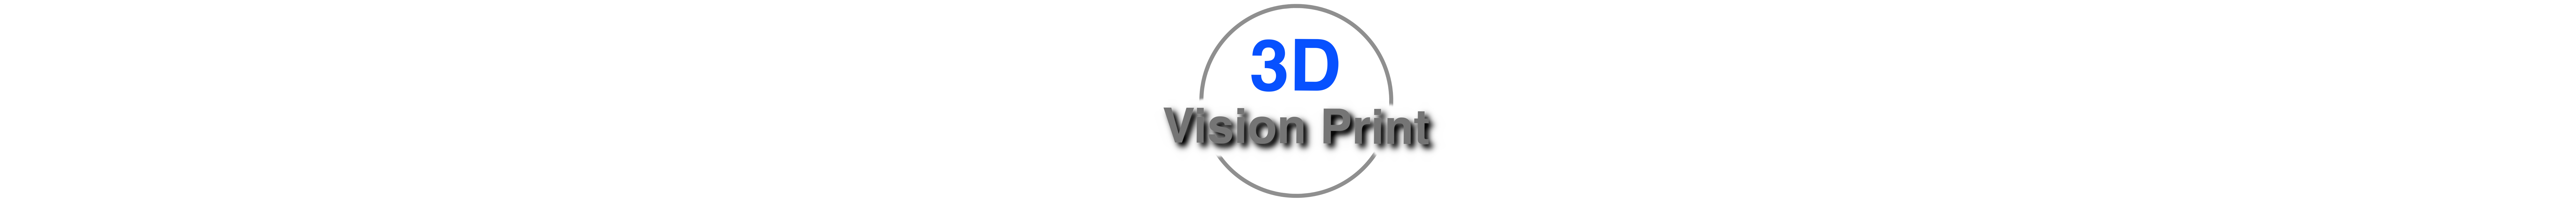 3D Vision Print